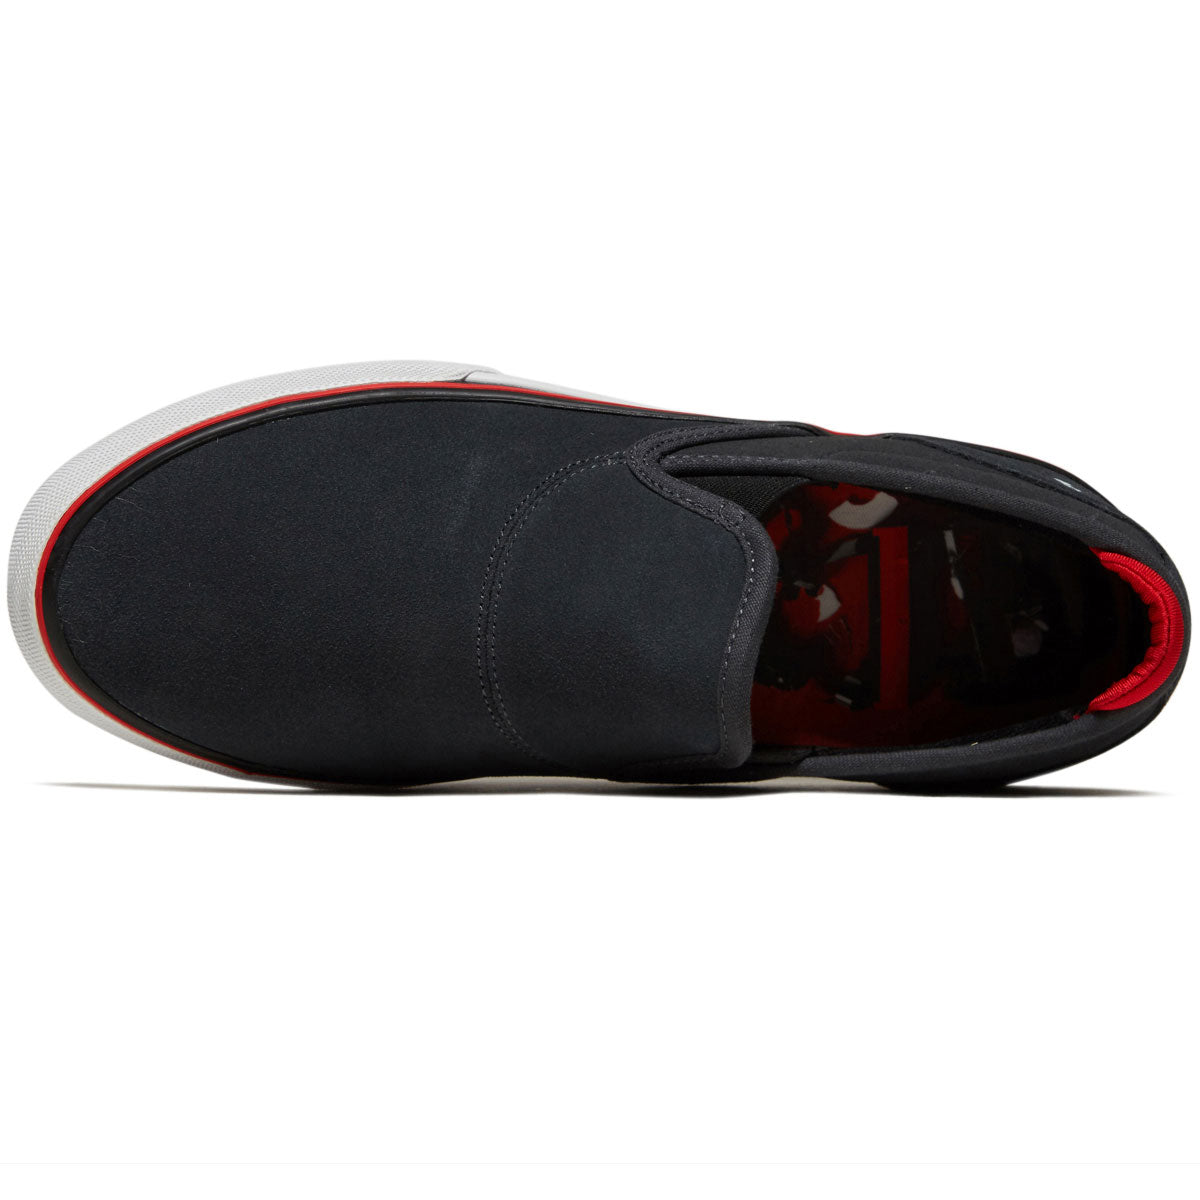 Emerica Wino G6 Slip-on Shoes - Dark Grey/Black/ Red image 3